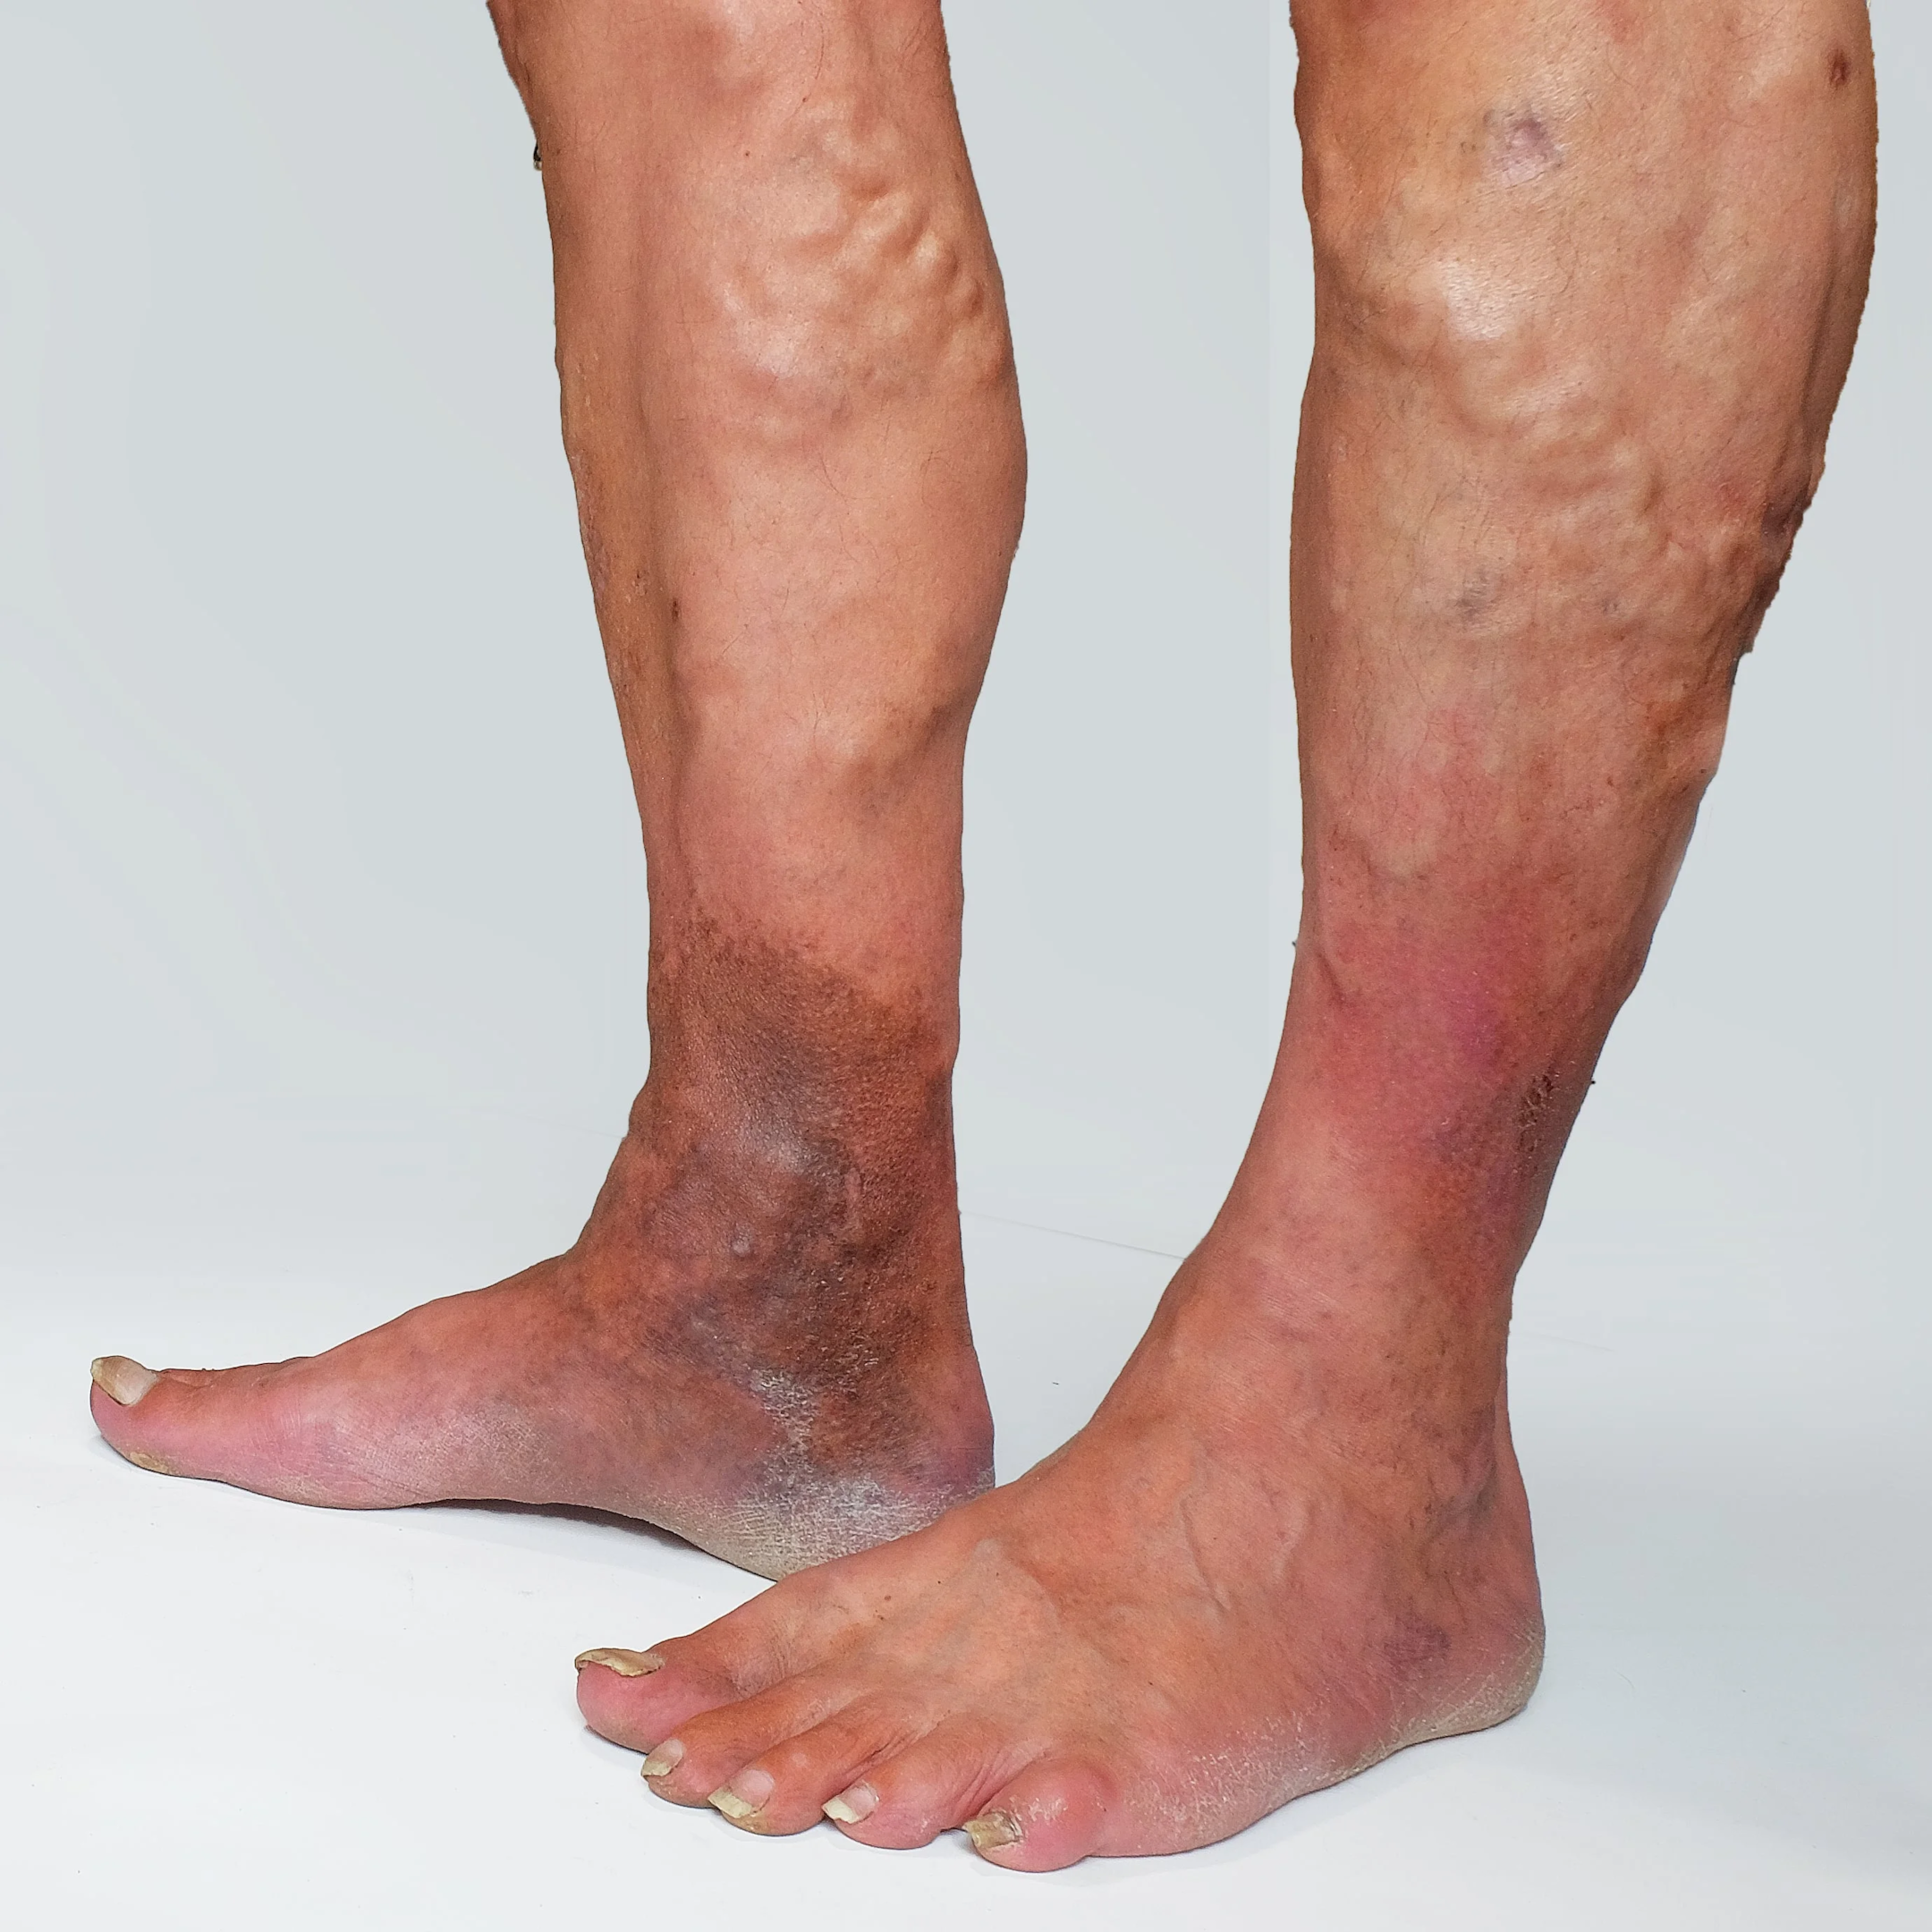 leg of a man presenting advanced chronic venous disease with skin discolouration